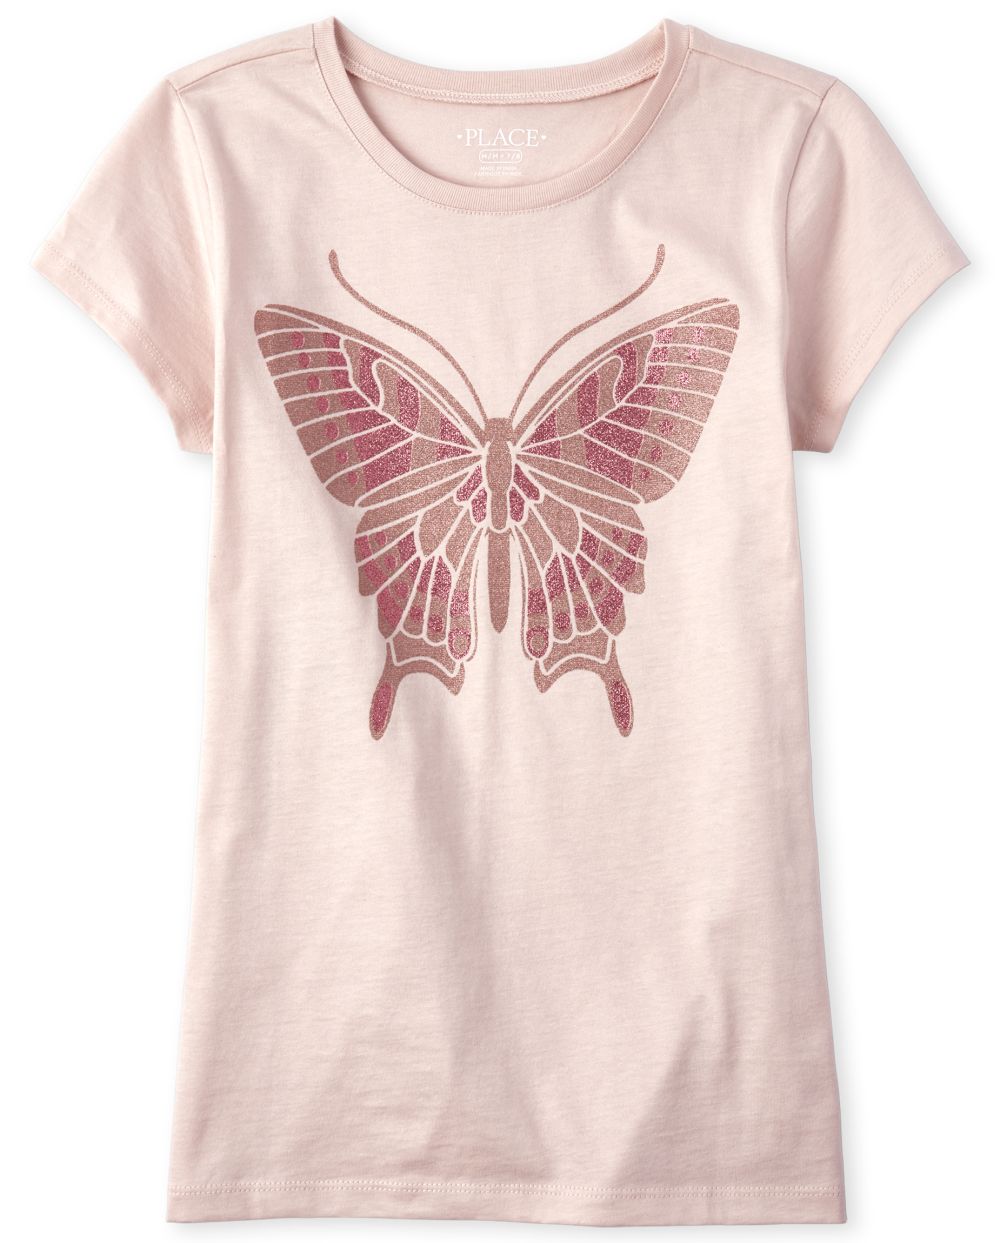 Girls Glitter Butterfly Graphic Tee